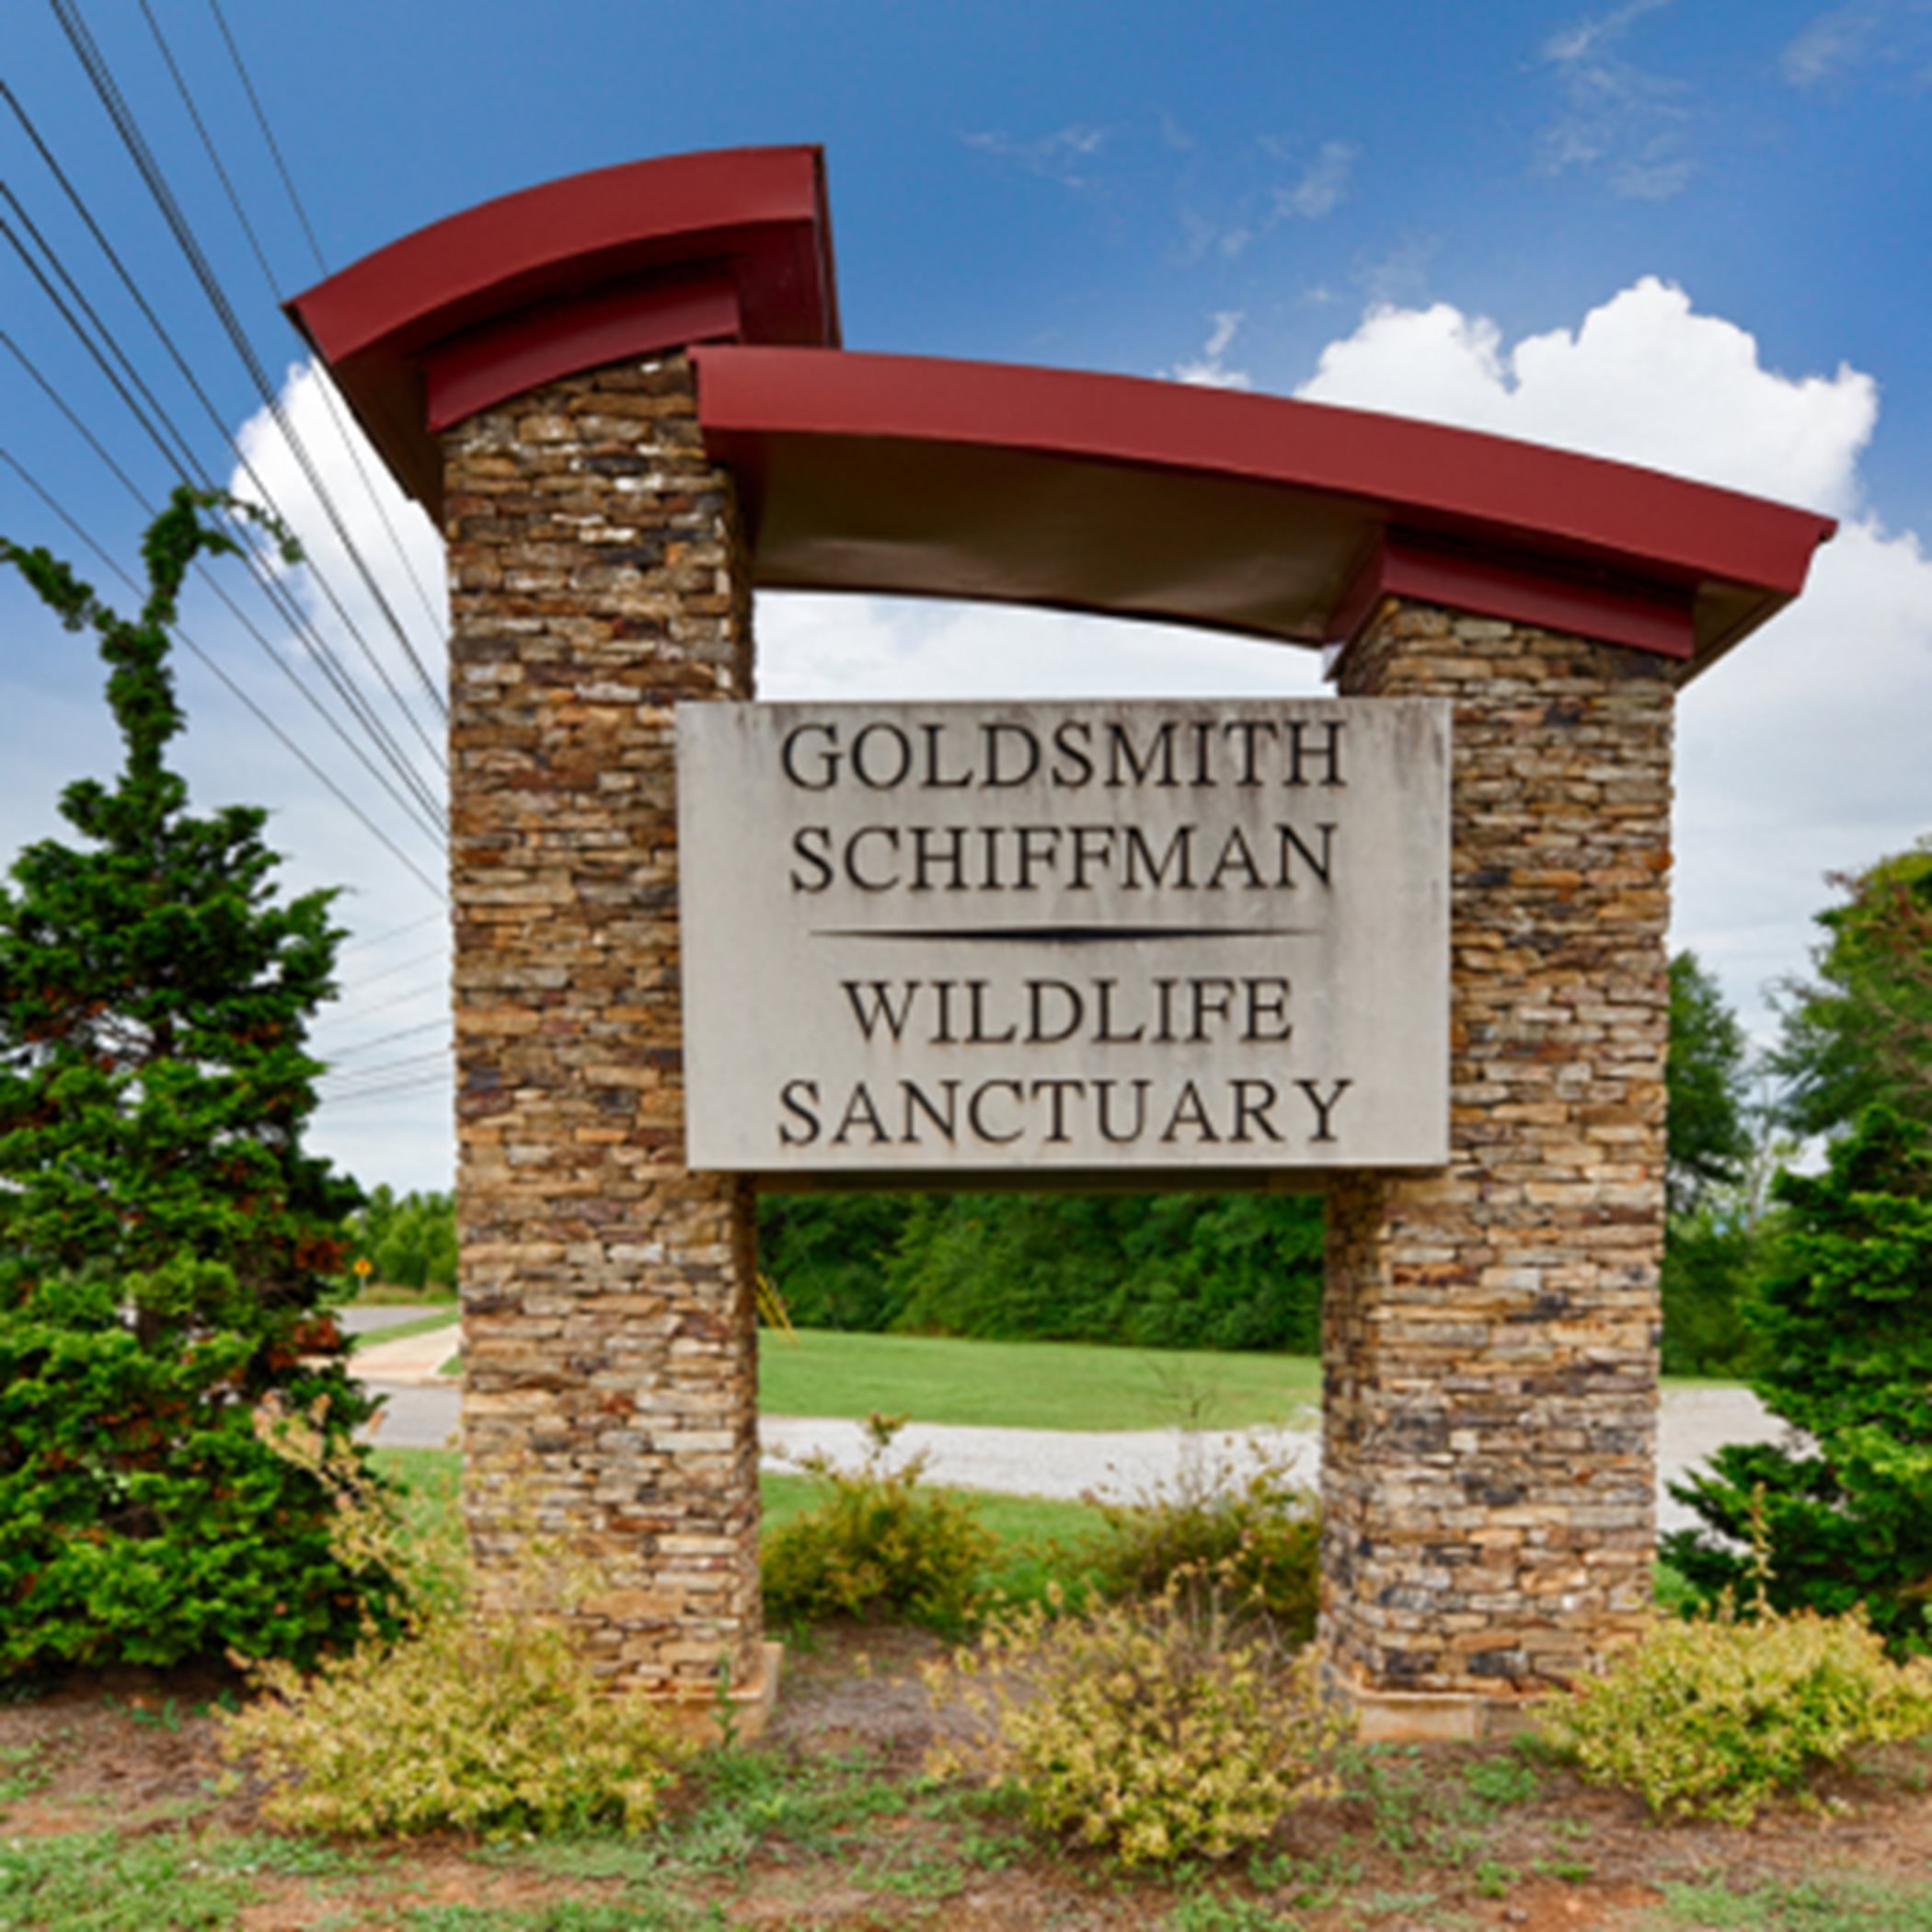 Goldsmith Schiffman Wildlife Sanctuary entry sign